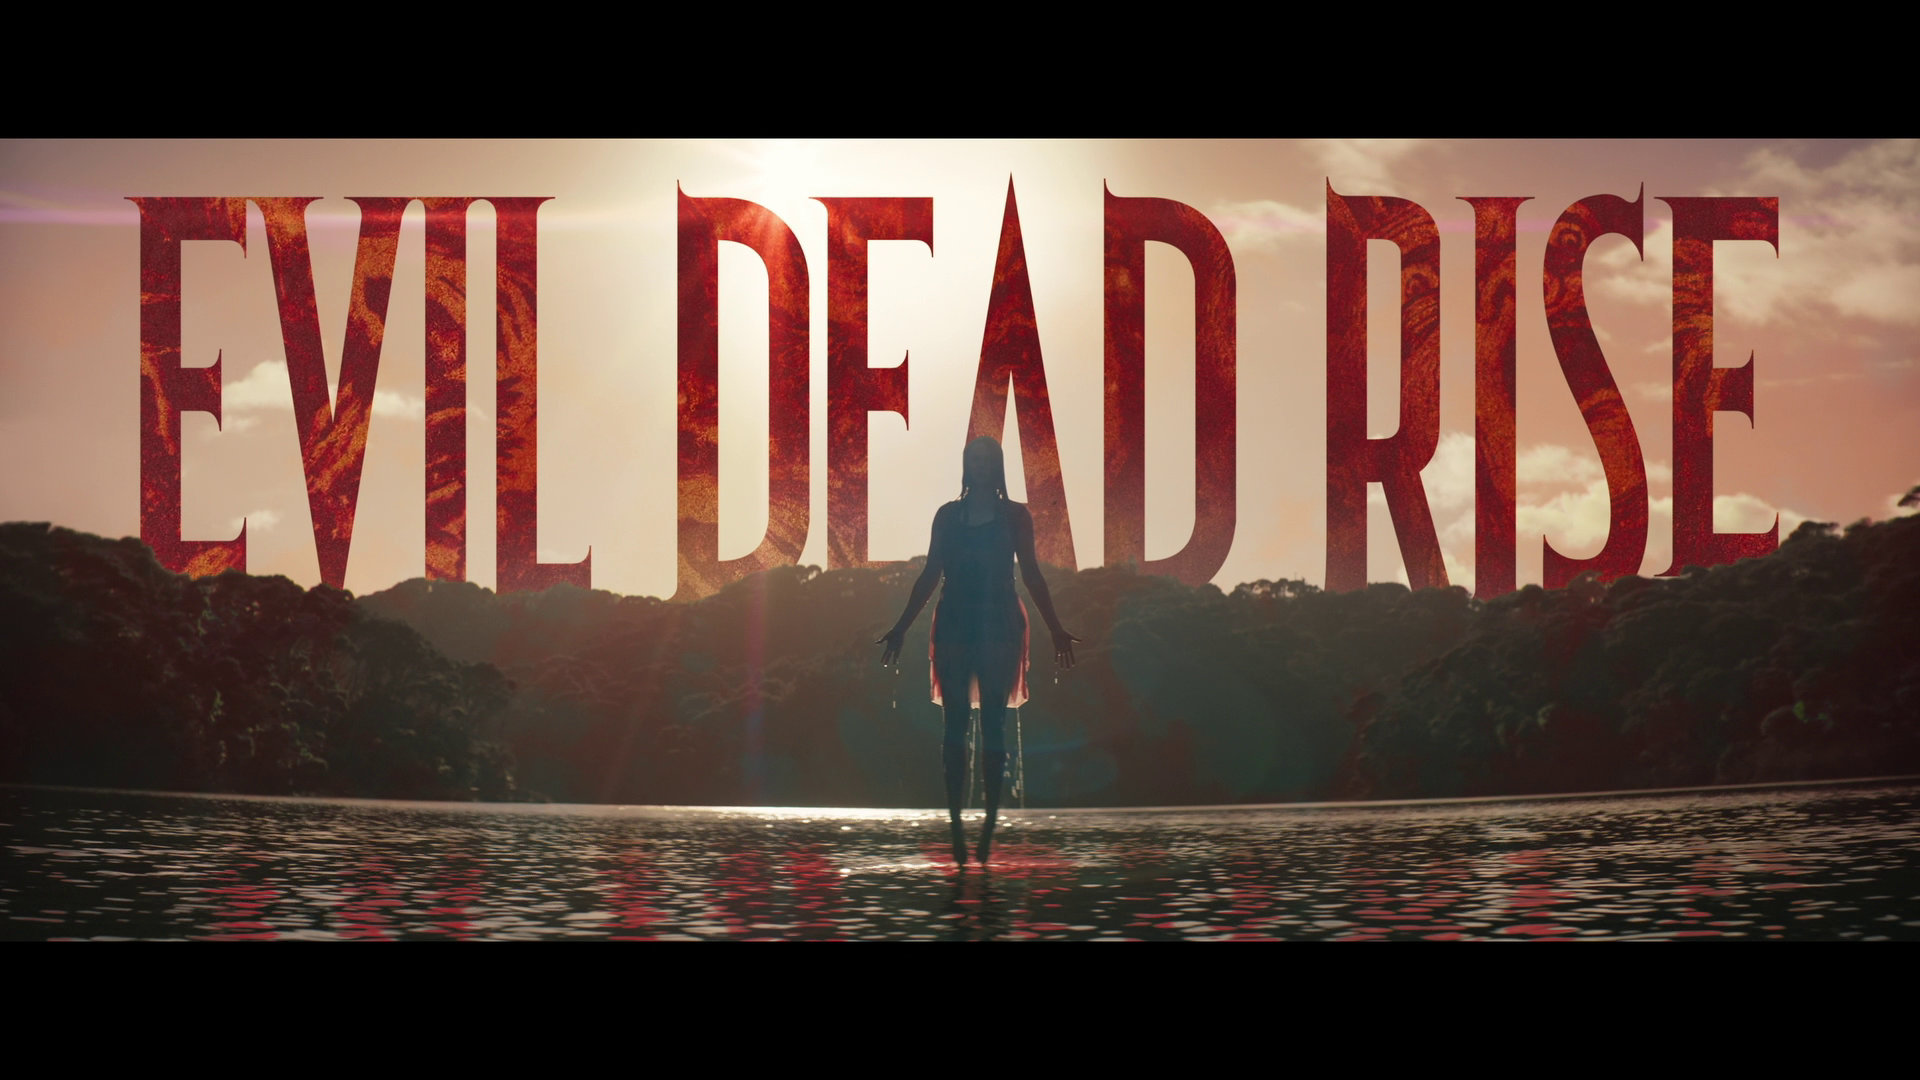 Evil Dead Rise Blu-ray  Region Free : Lily Sullivan, Alyssa Sutherland,  Morgan Davies, Gabrielle Echols, Lee Cronin: Movies & TV 